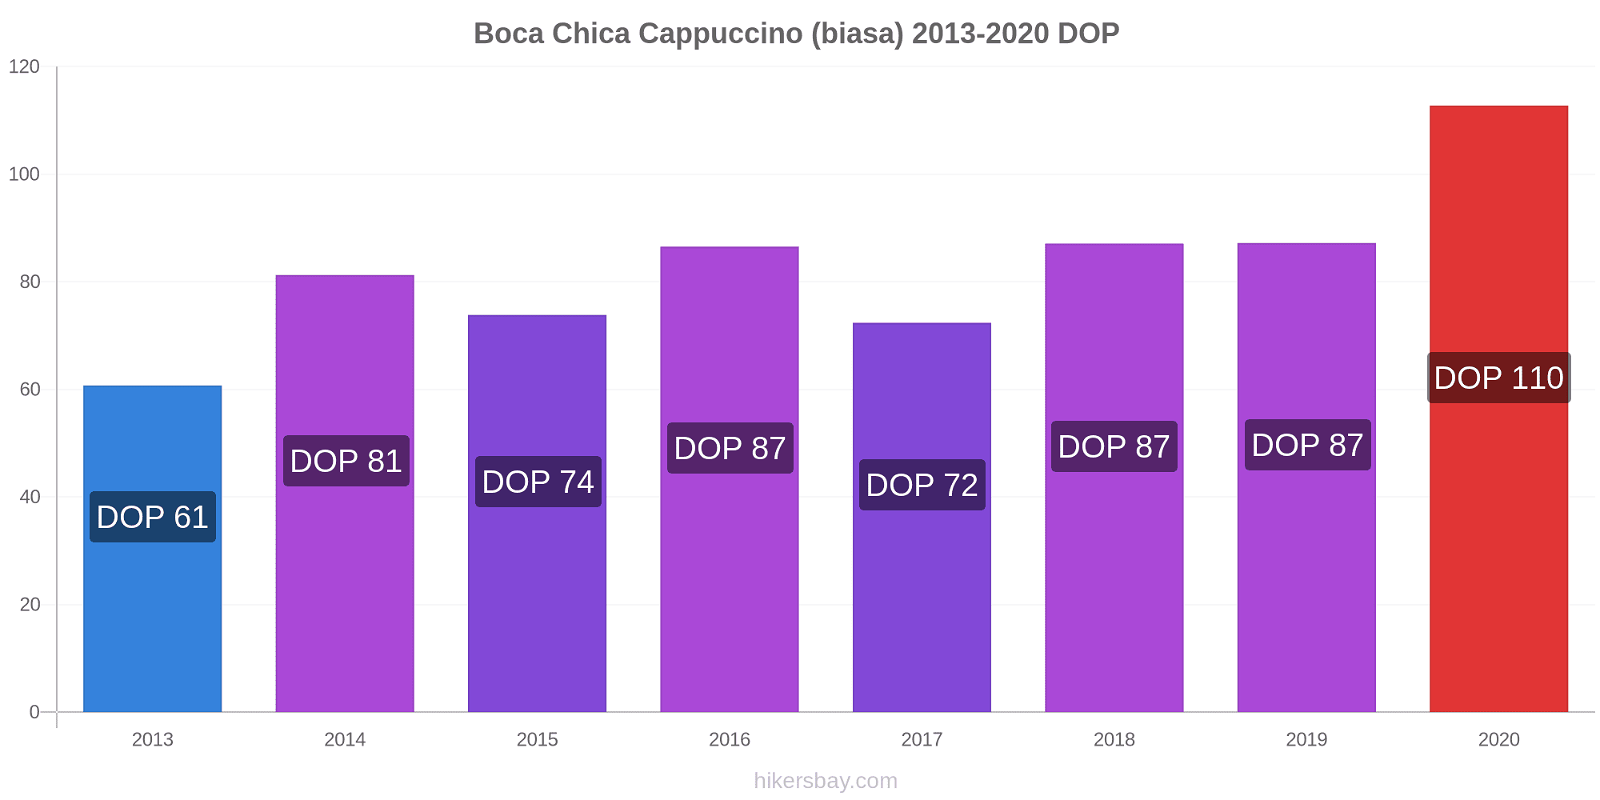 Boca Chica perubahan harga Cappuccino (biasa) hikersbay.com